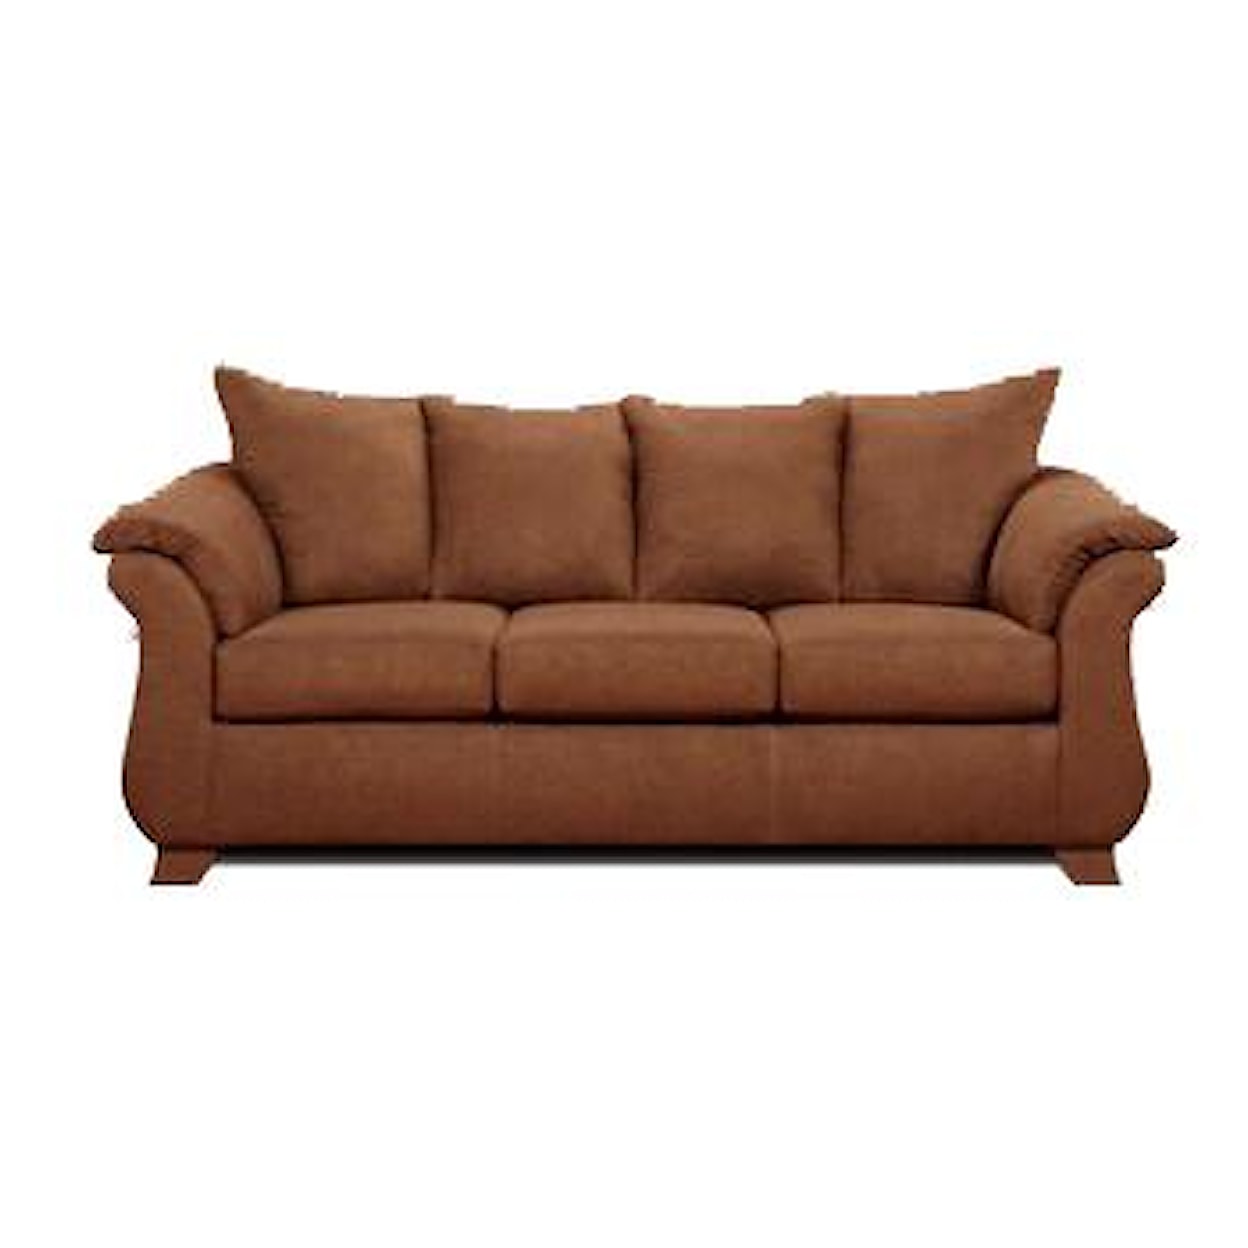 Affordable Furniture 6700 Sofa